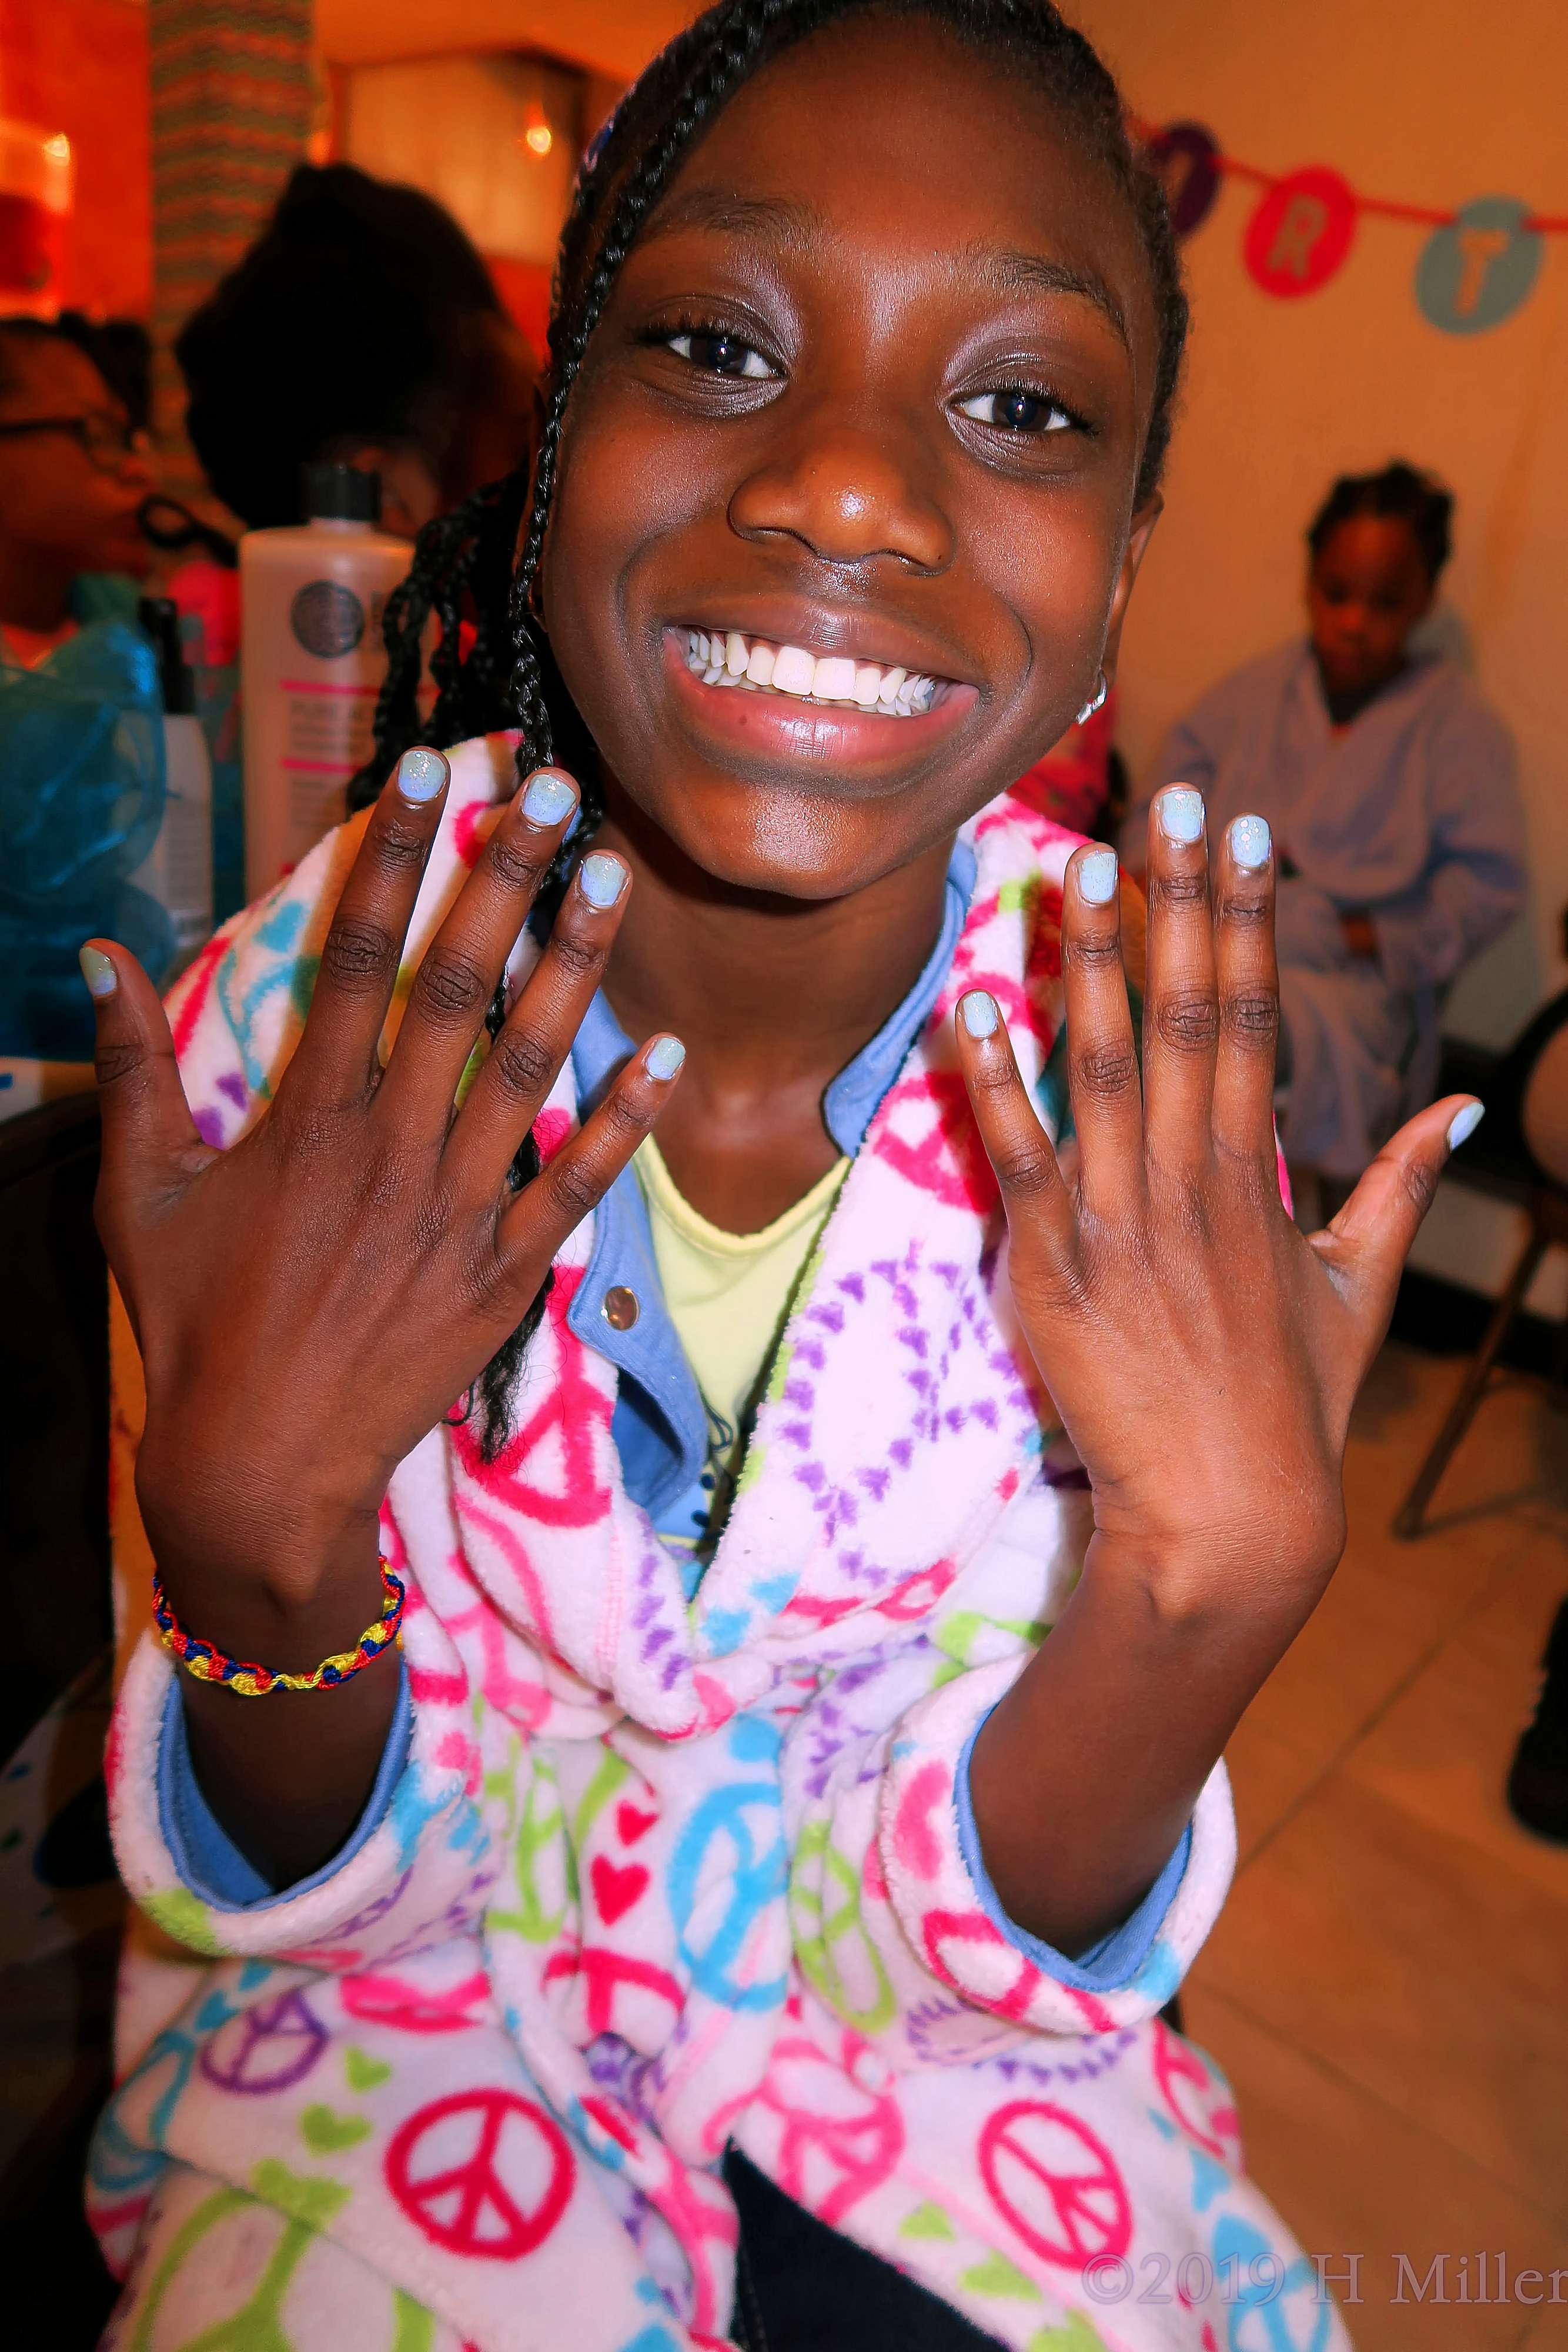 Oooooooo Her Kids Manicure Is So Pretty!!